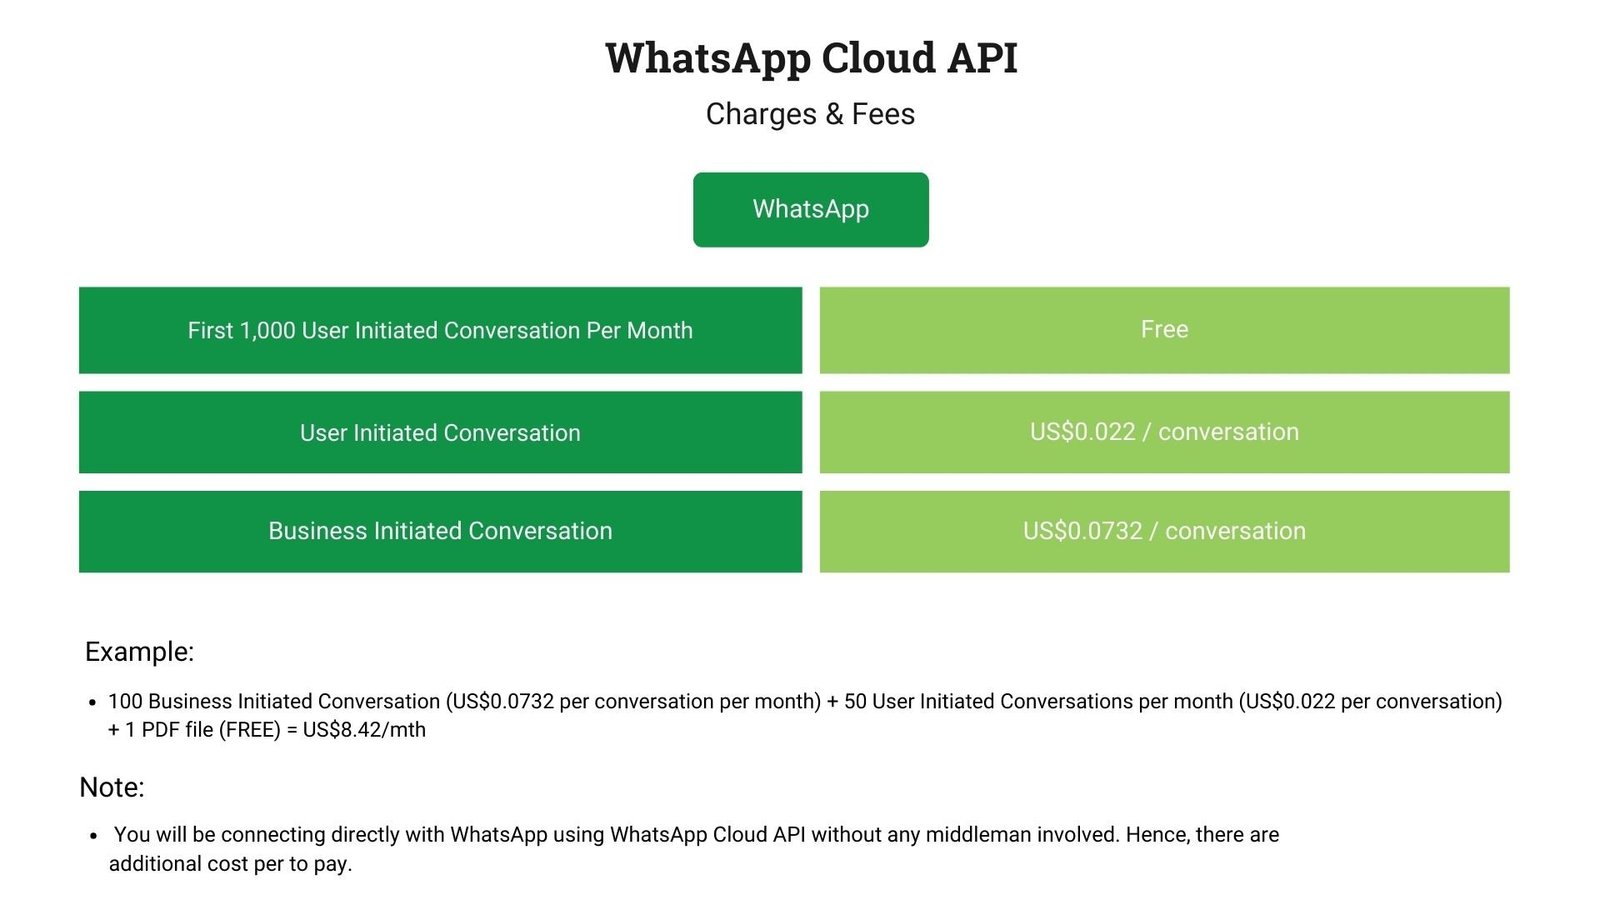 WhatsApp Cloud API pricing